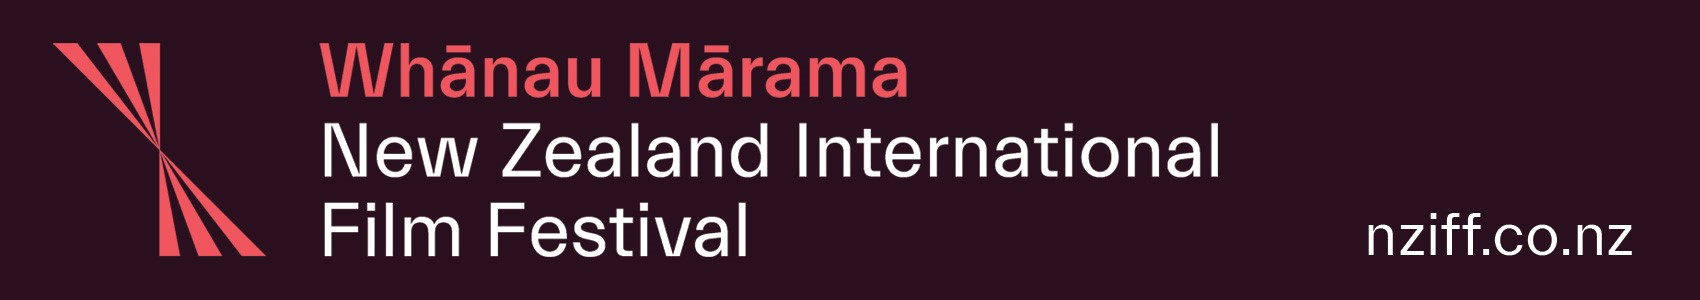 Whānau Mārama: New Zealand International Film Festival To Take Place in July and August 2022